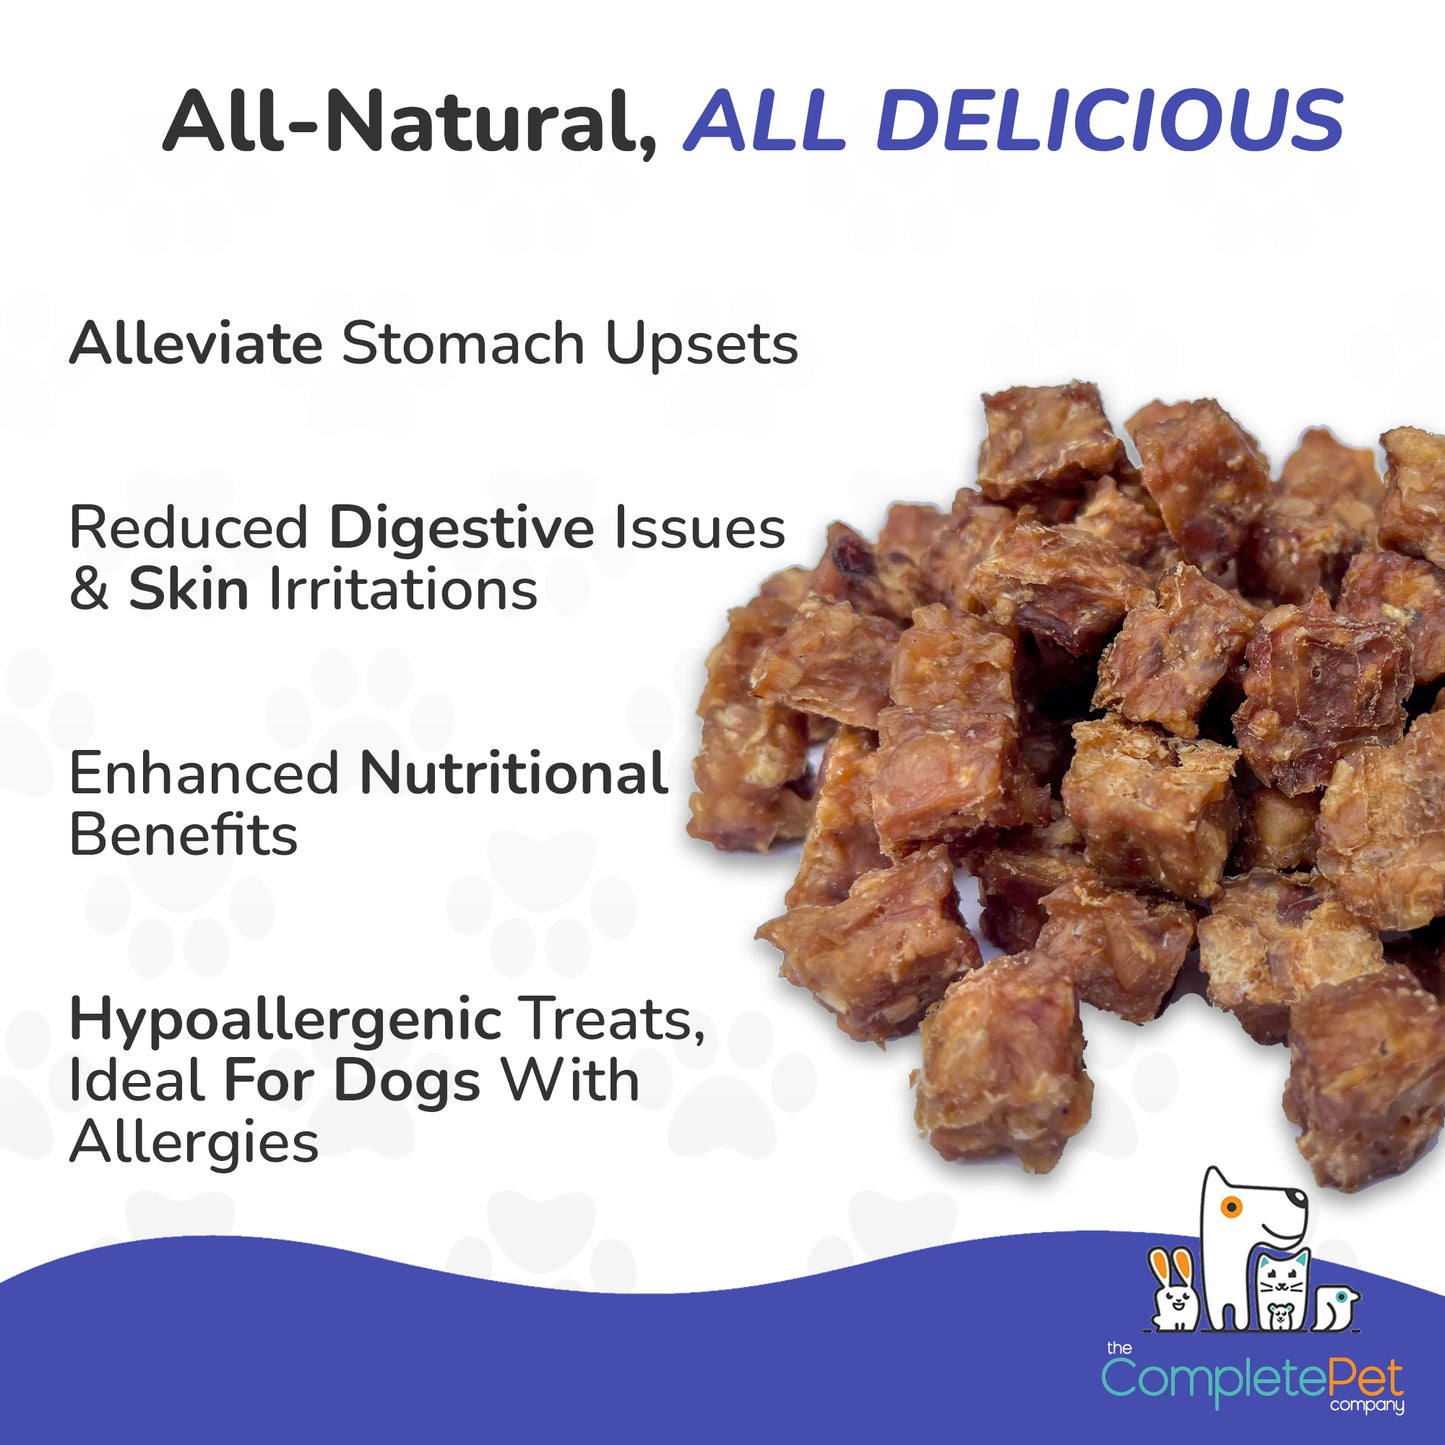 Natural Meat Dog Treats - RABBIT - Low Fat Healthy Dog Training Treats